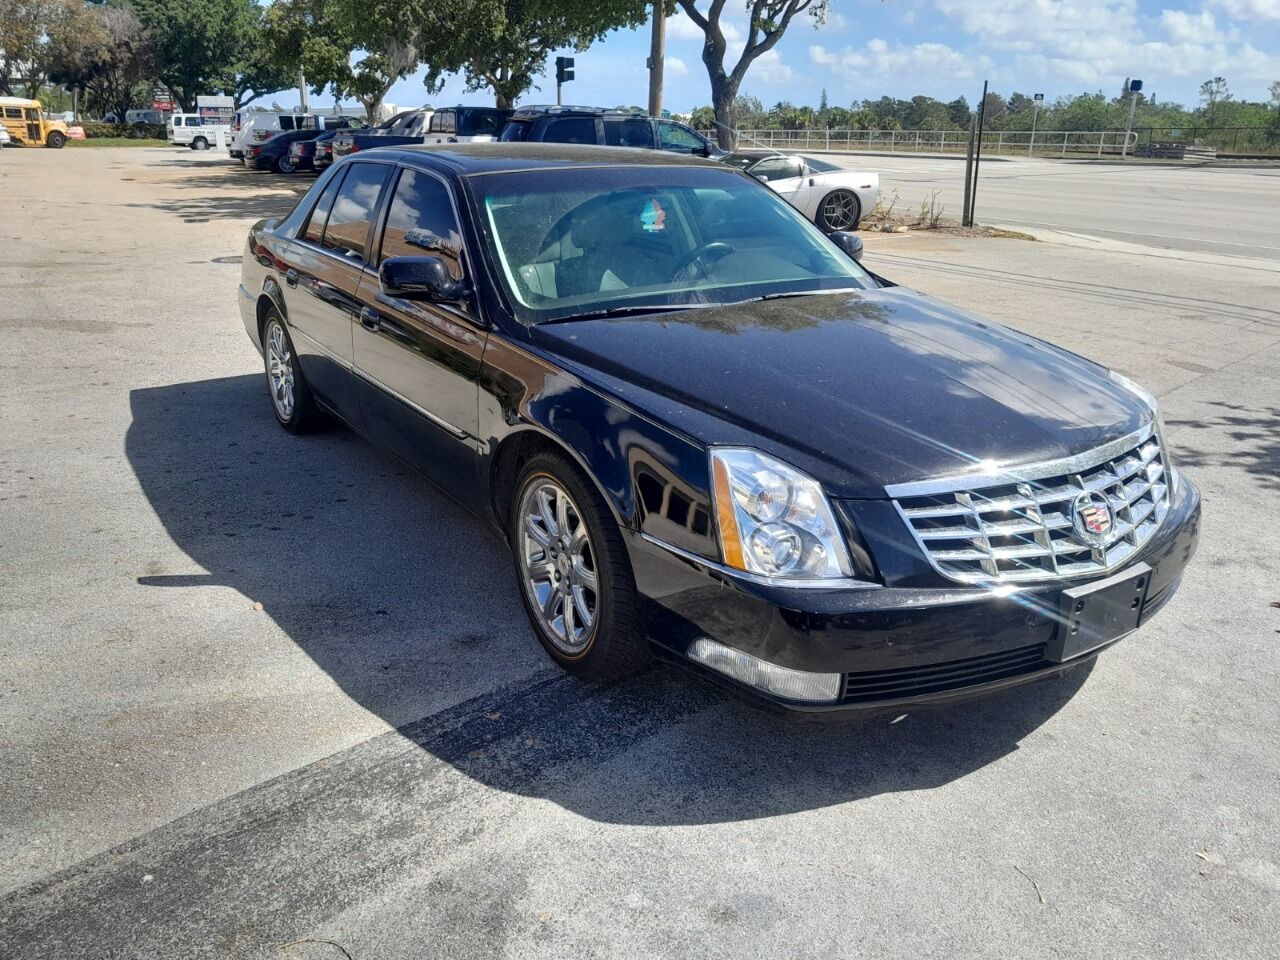 2009 Cadillac DTS Sedan - $5,450